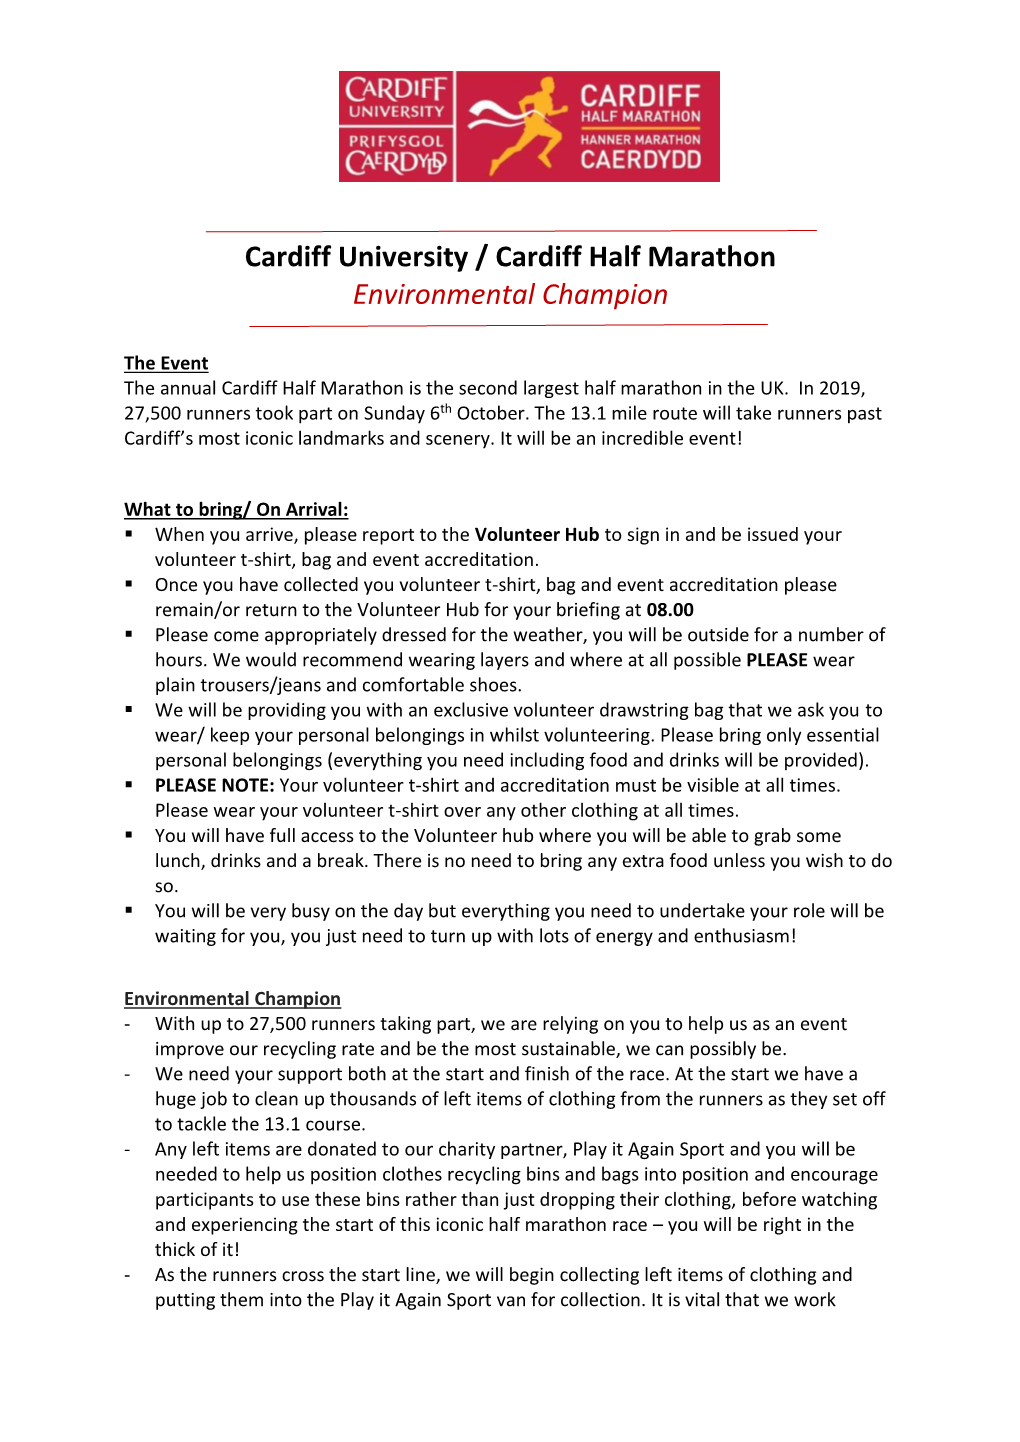 Cardiff University / Cardiff Half Marathon Environmental Champion